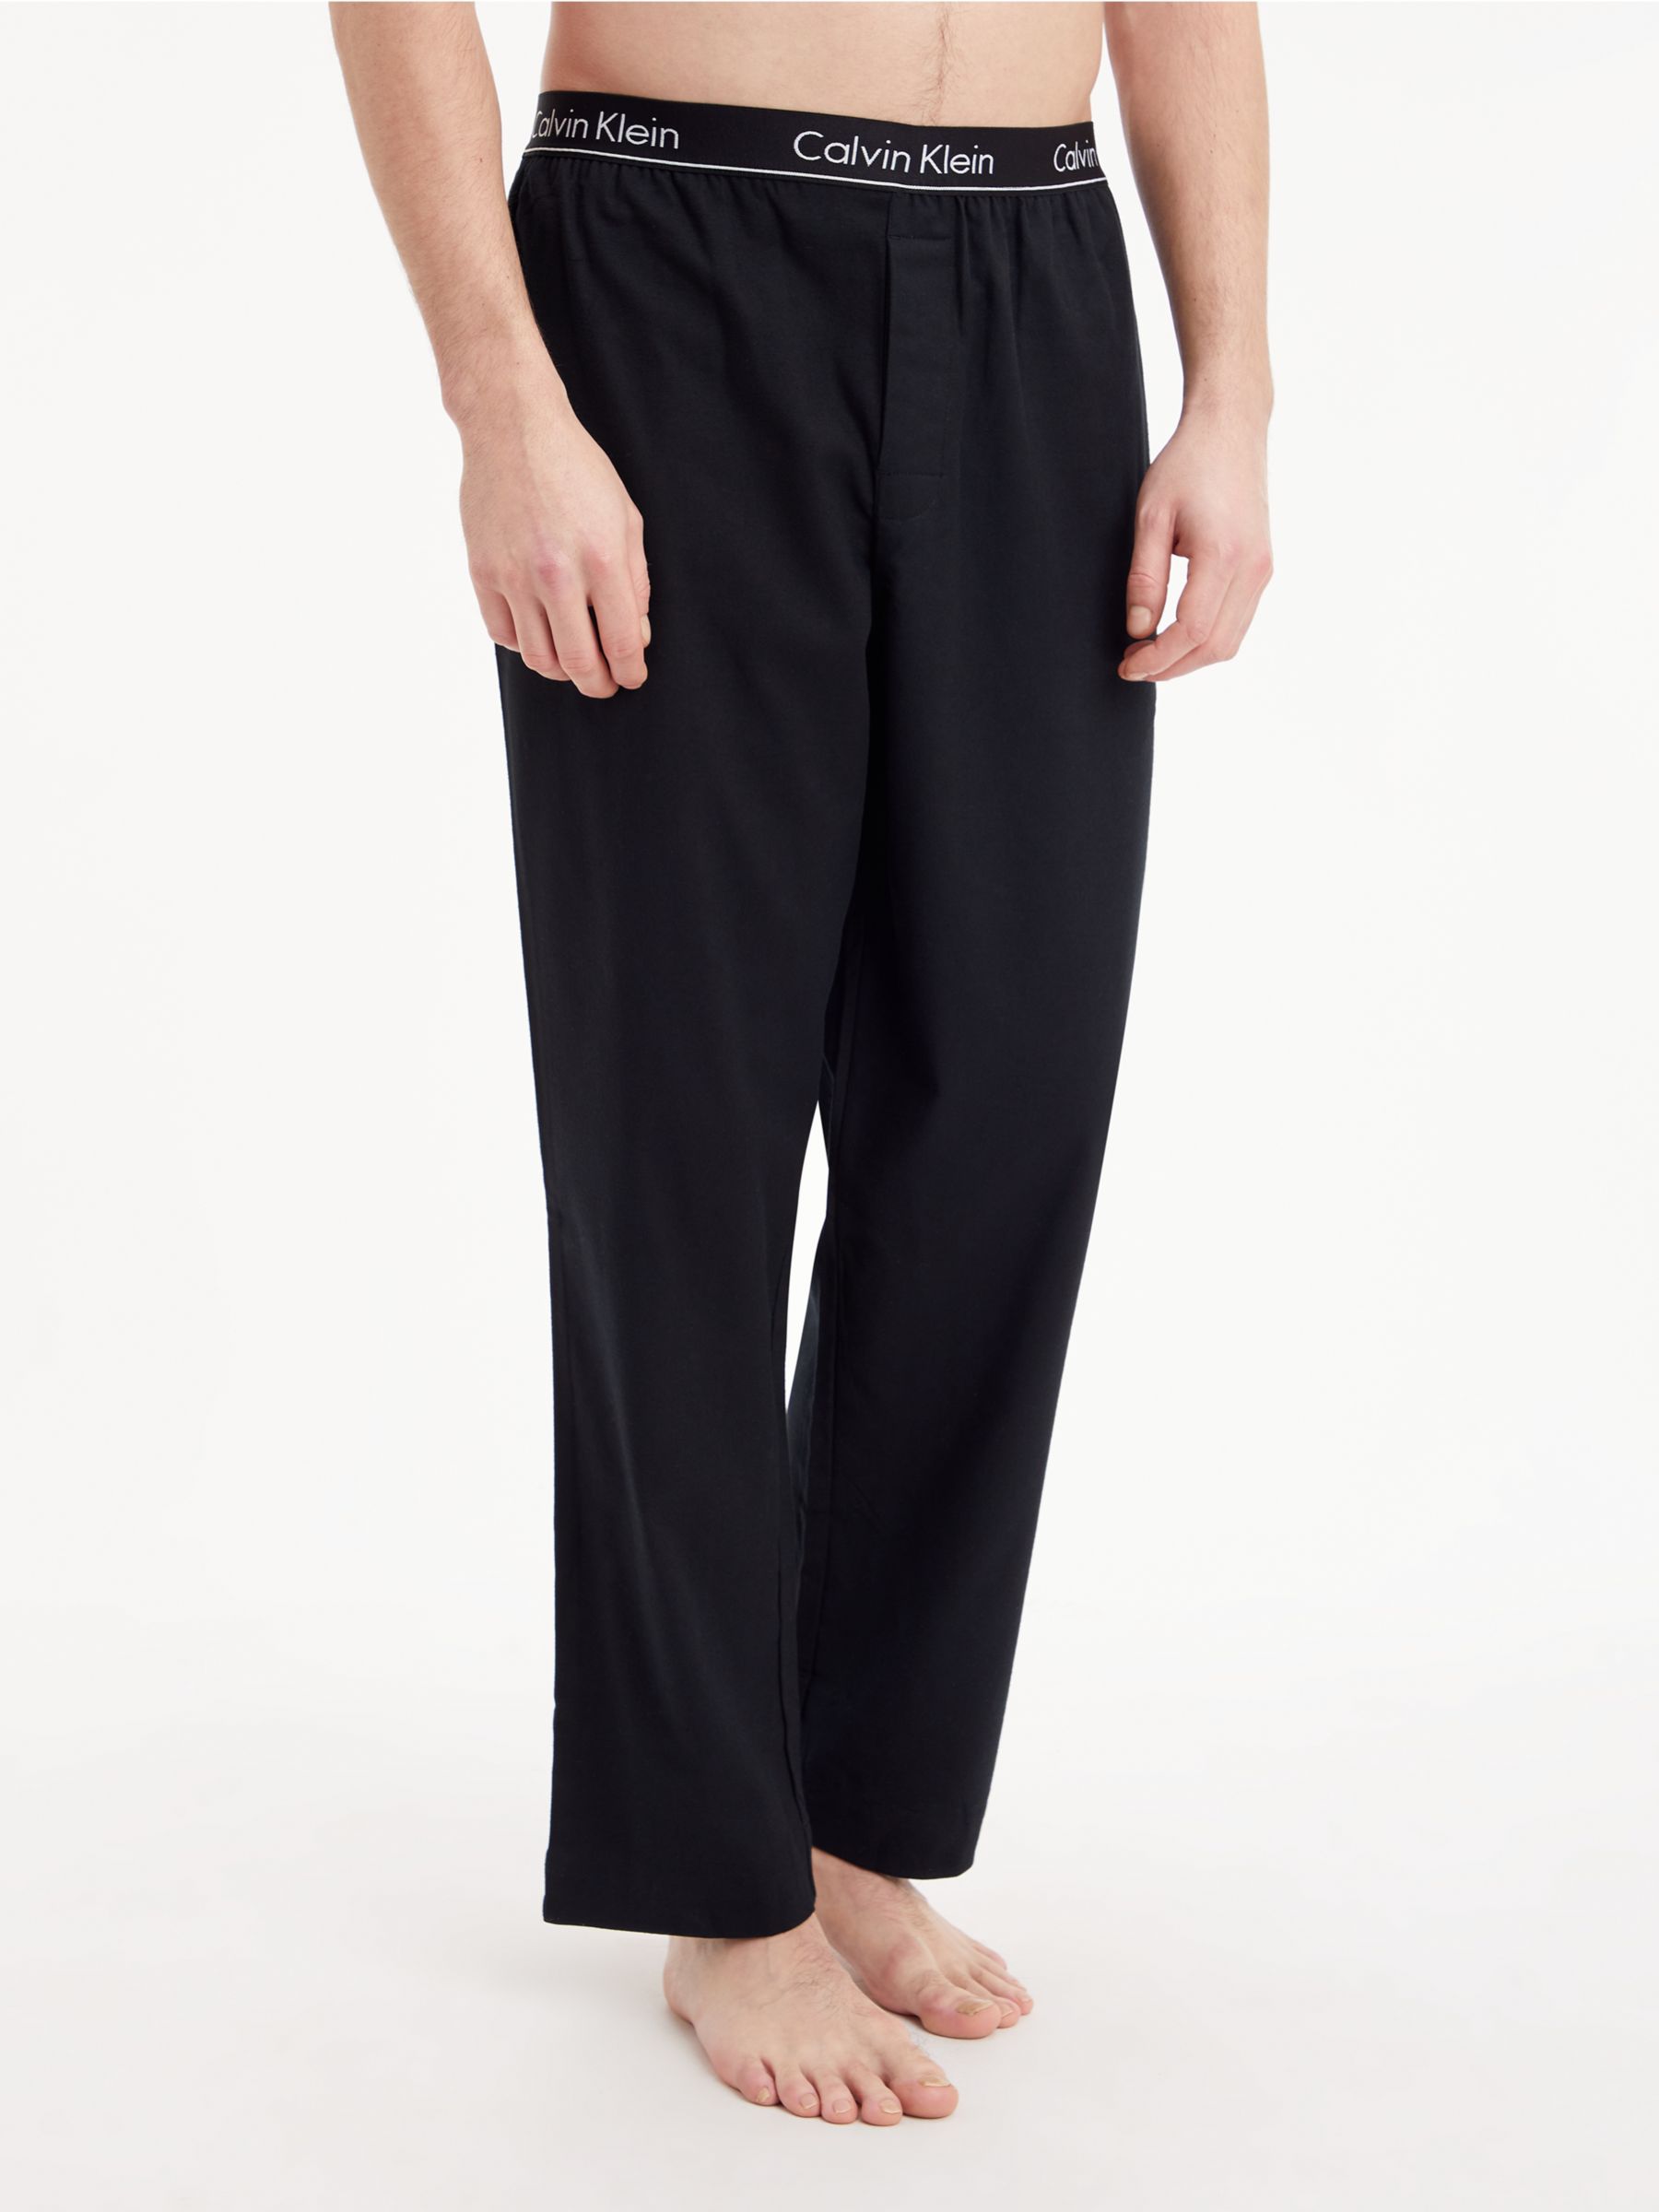 Calvin Klein Flannel Pyjama Bottoms, Black at John Lewis & Partners